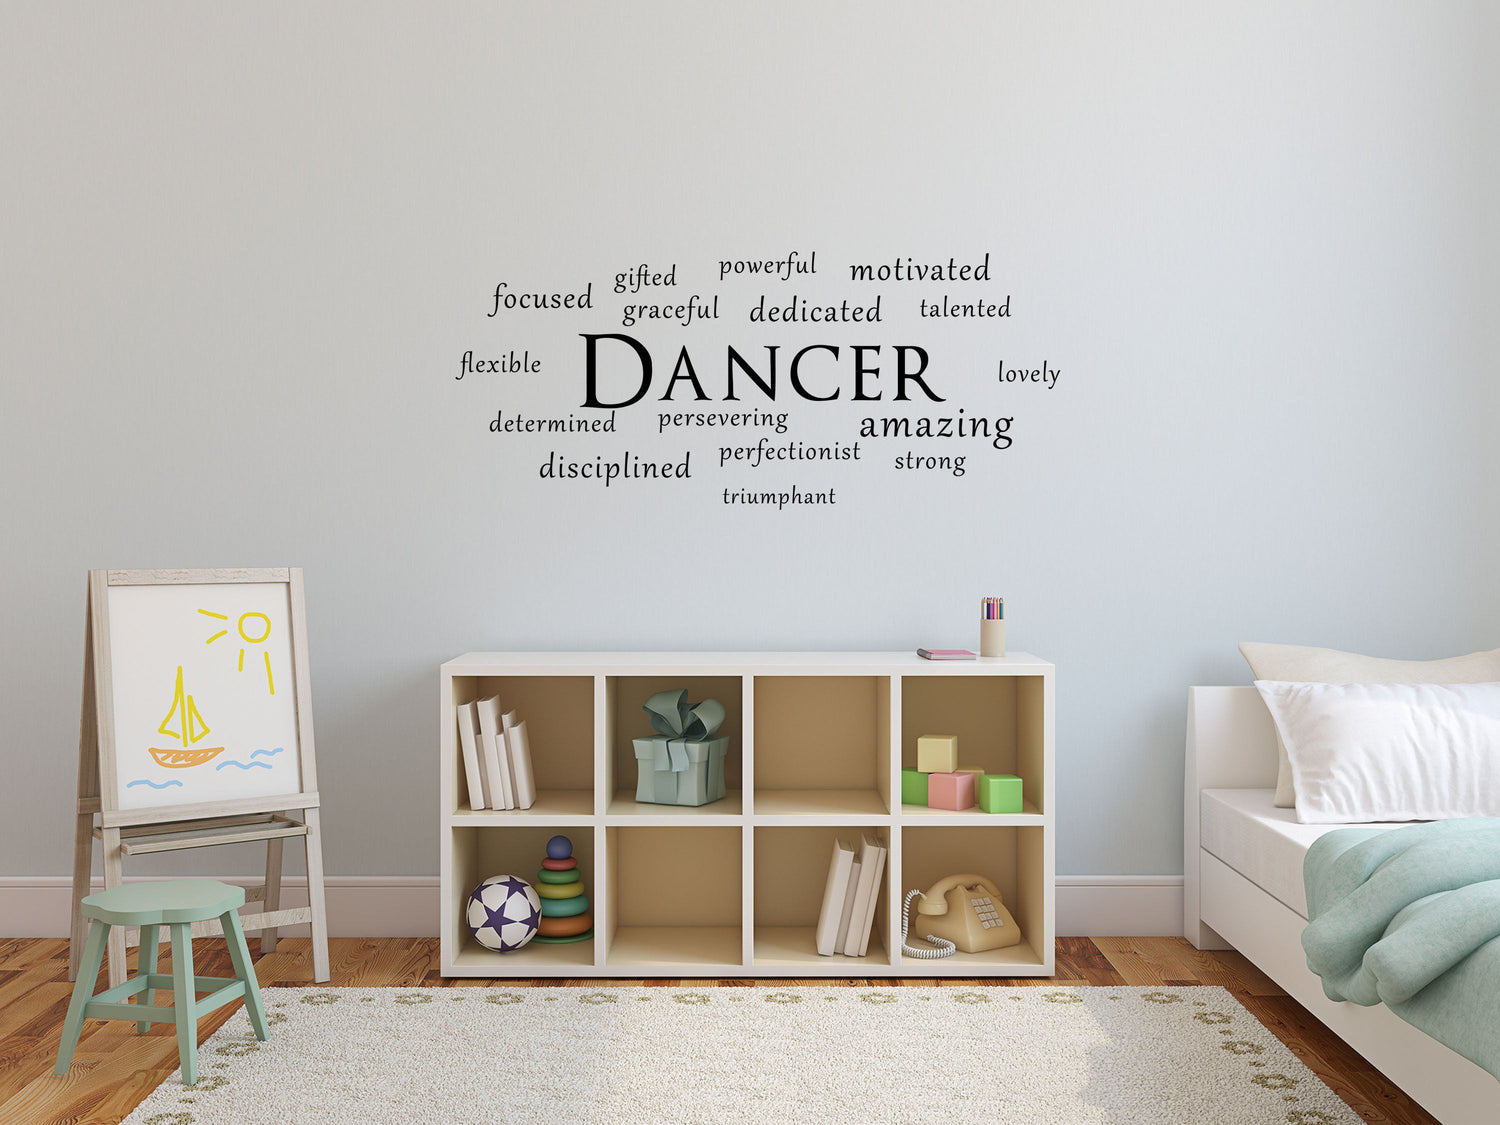 Dancer Word Cloud - Gym Wall Decor Sticker - Inspirational Wall Decals Vinyl Wall Decal Done 